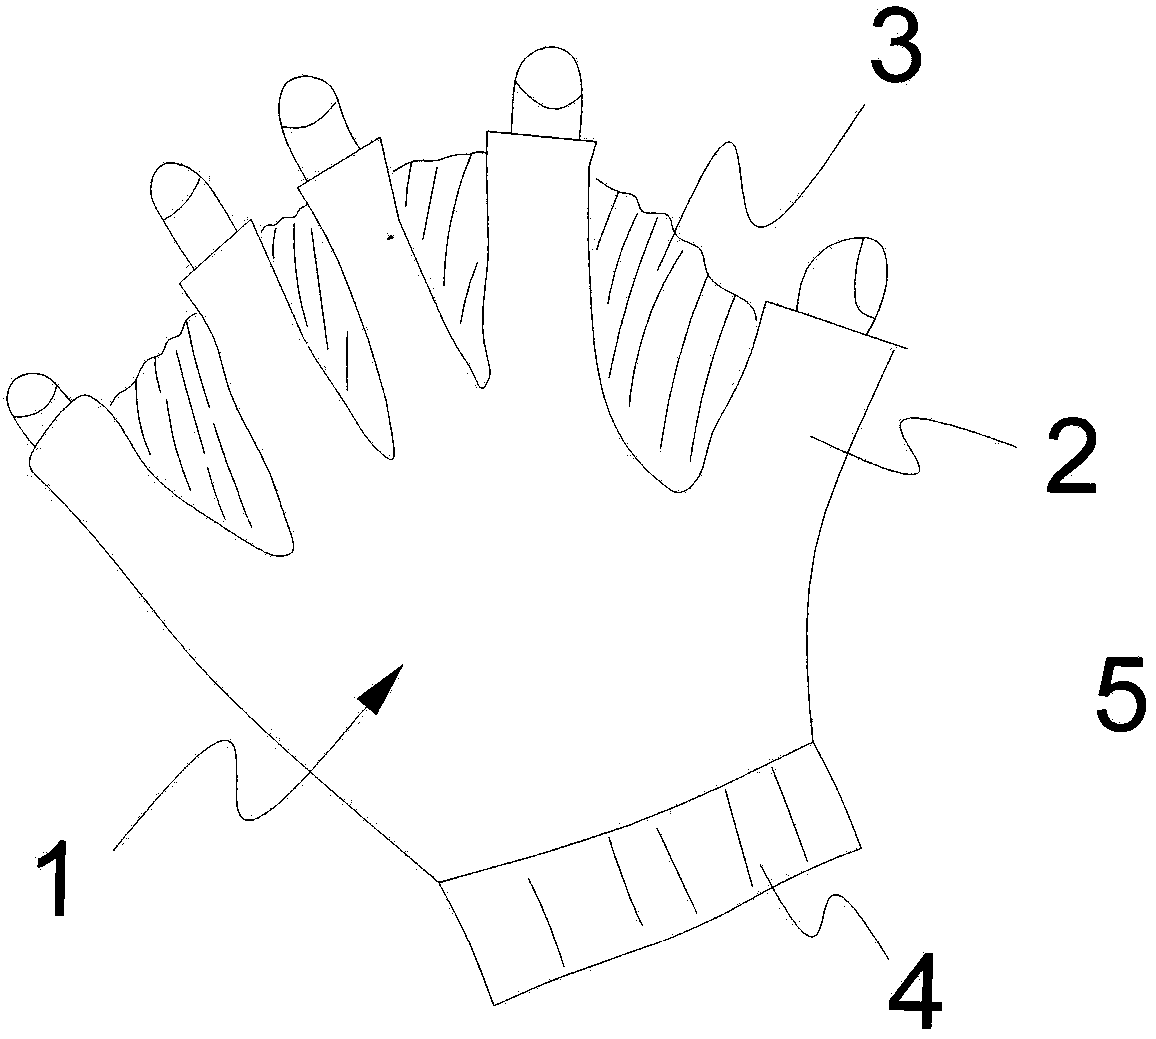 Ball-gripping type anti-scratching massage glove